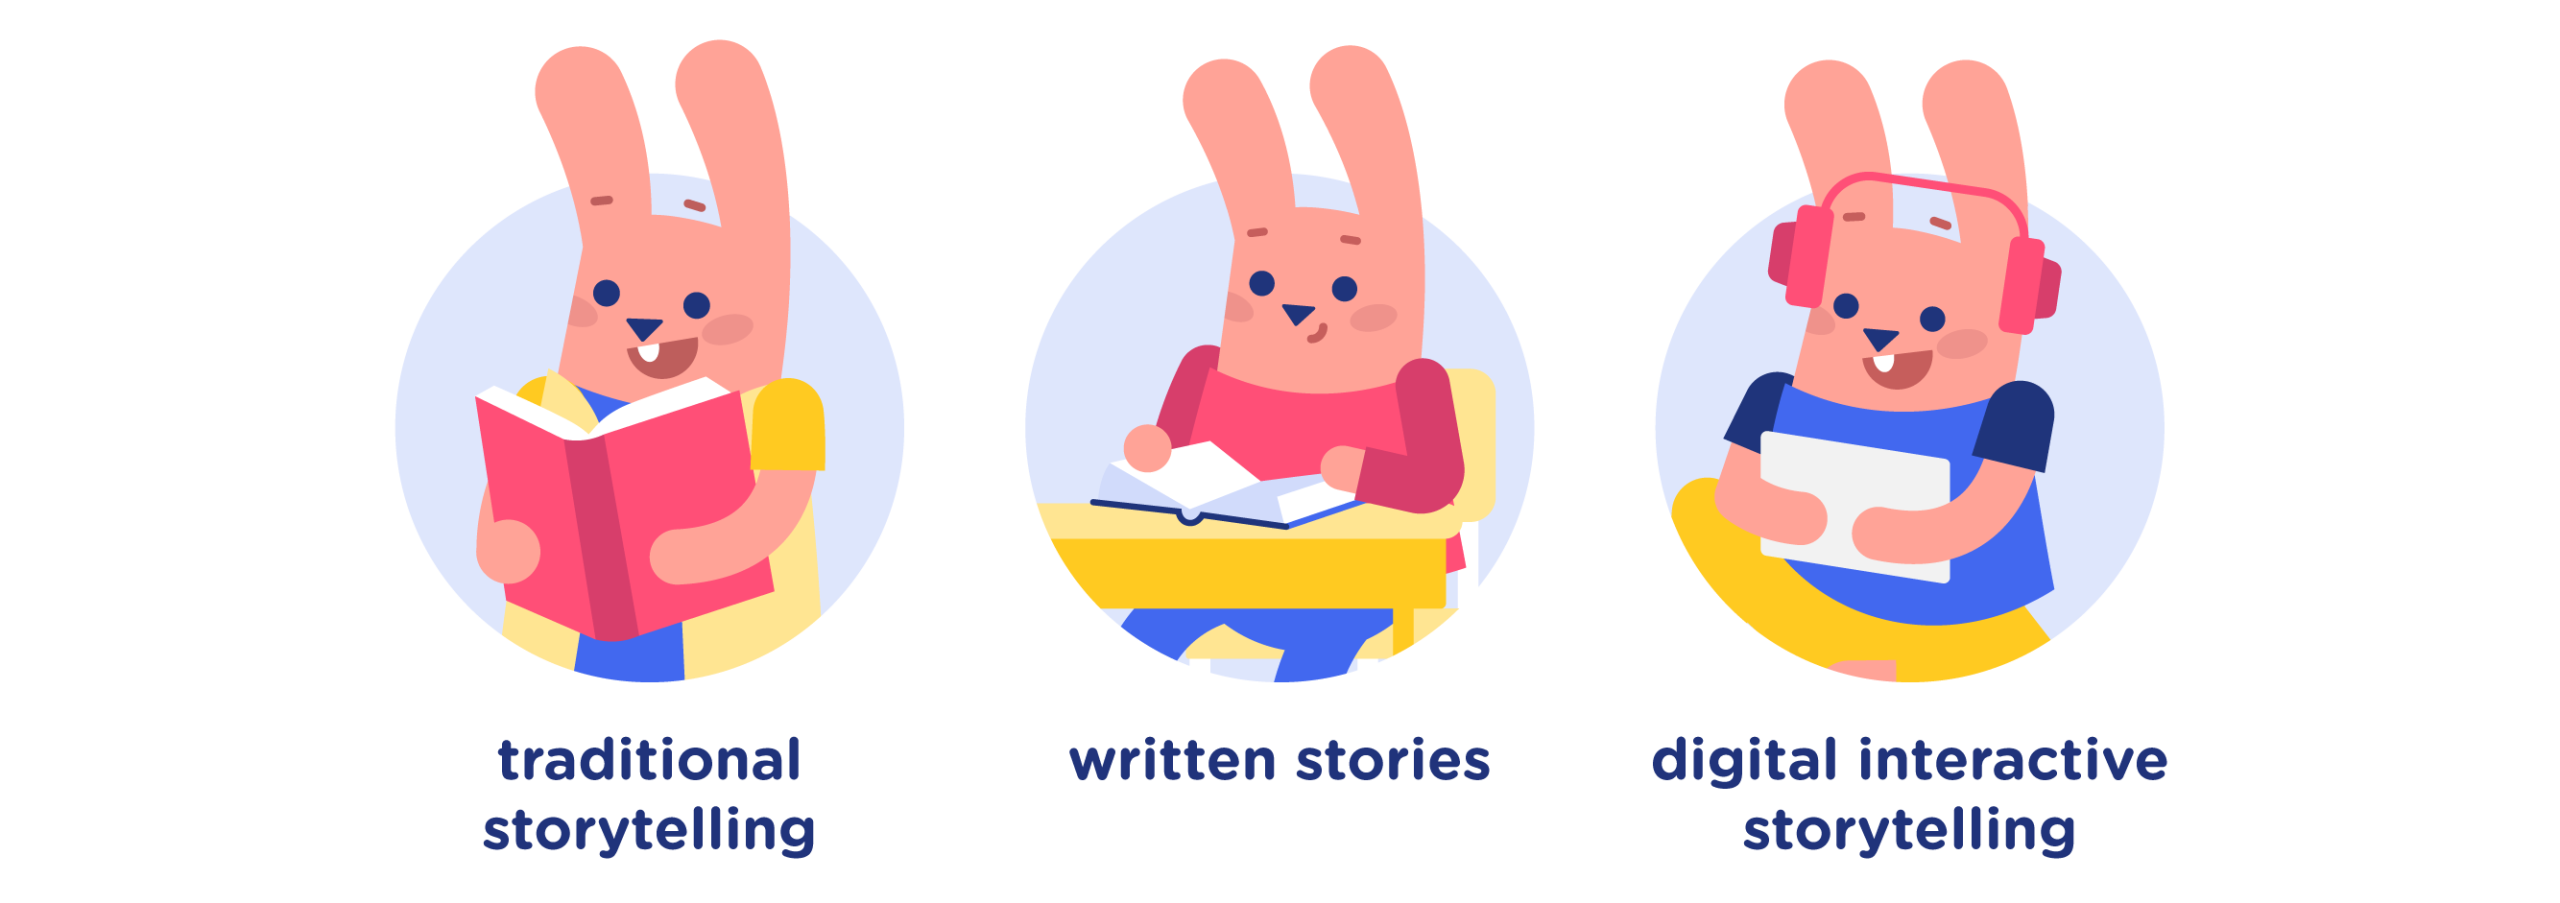 Types of storytelling methods